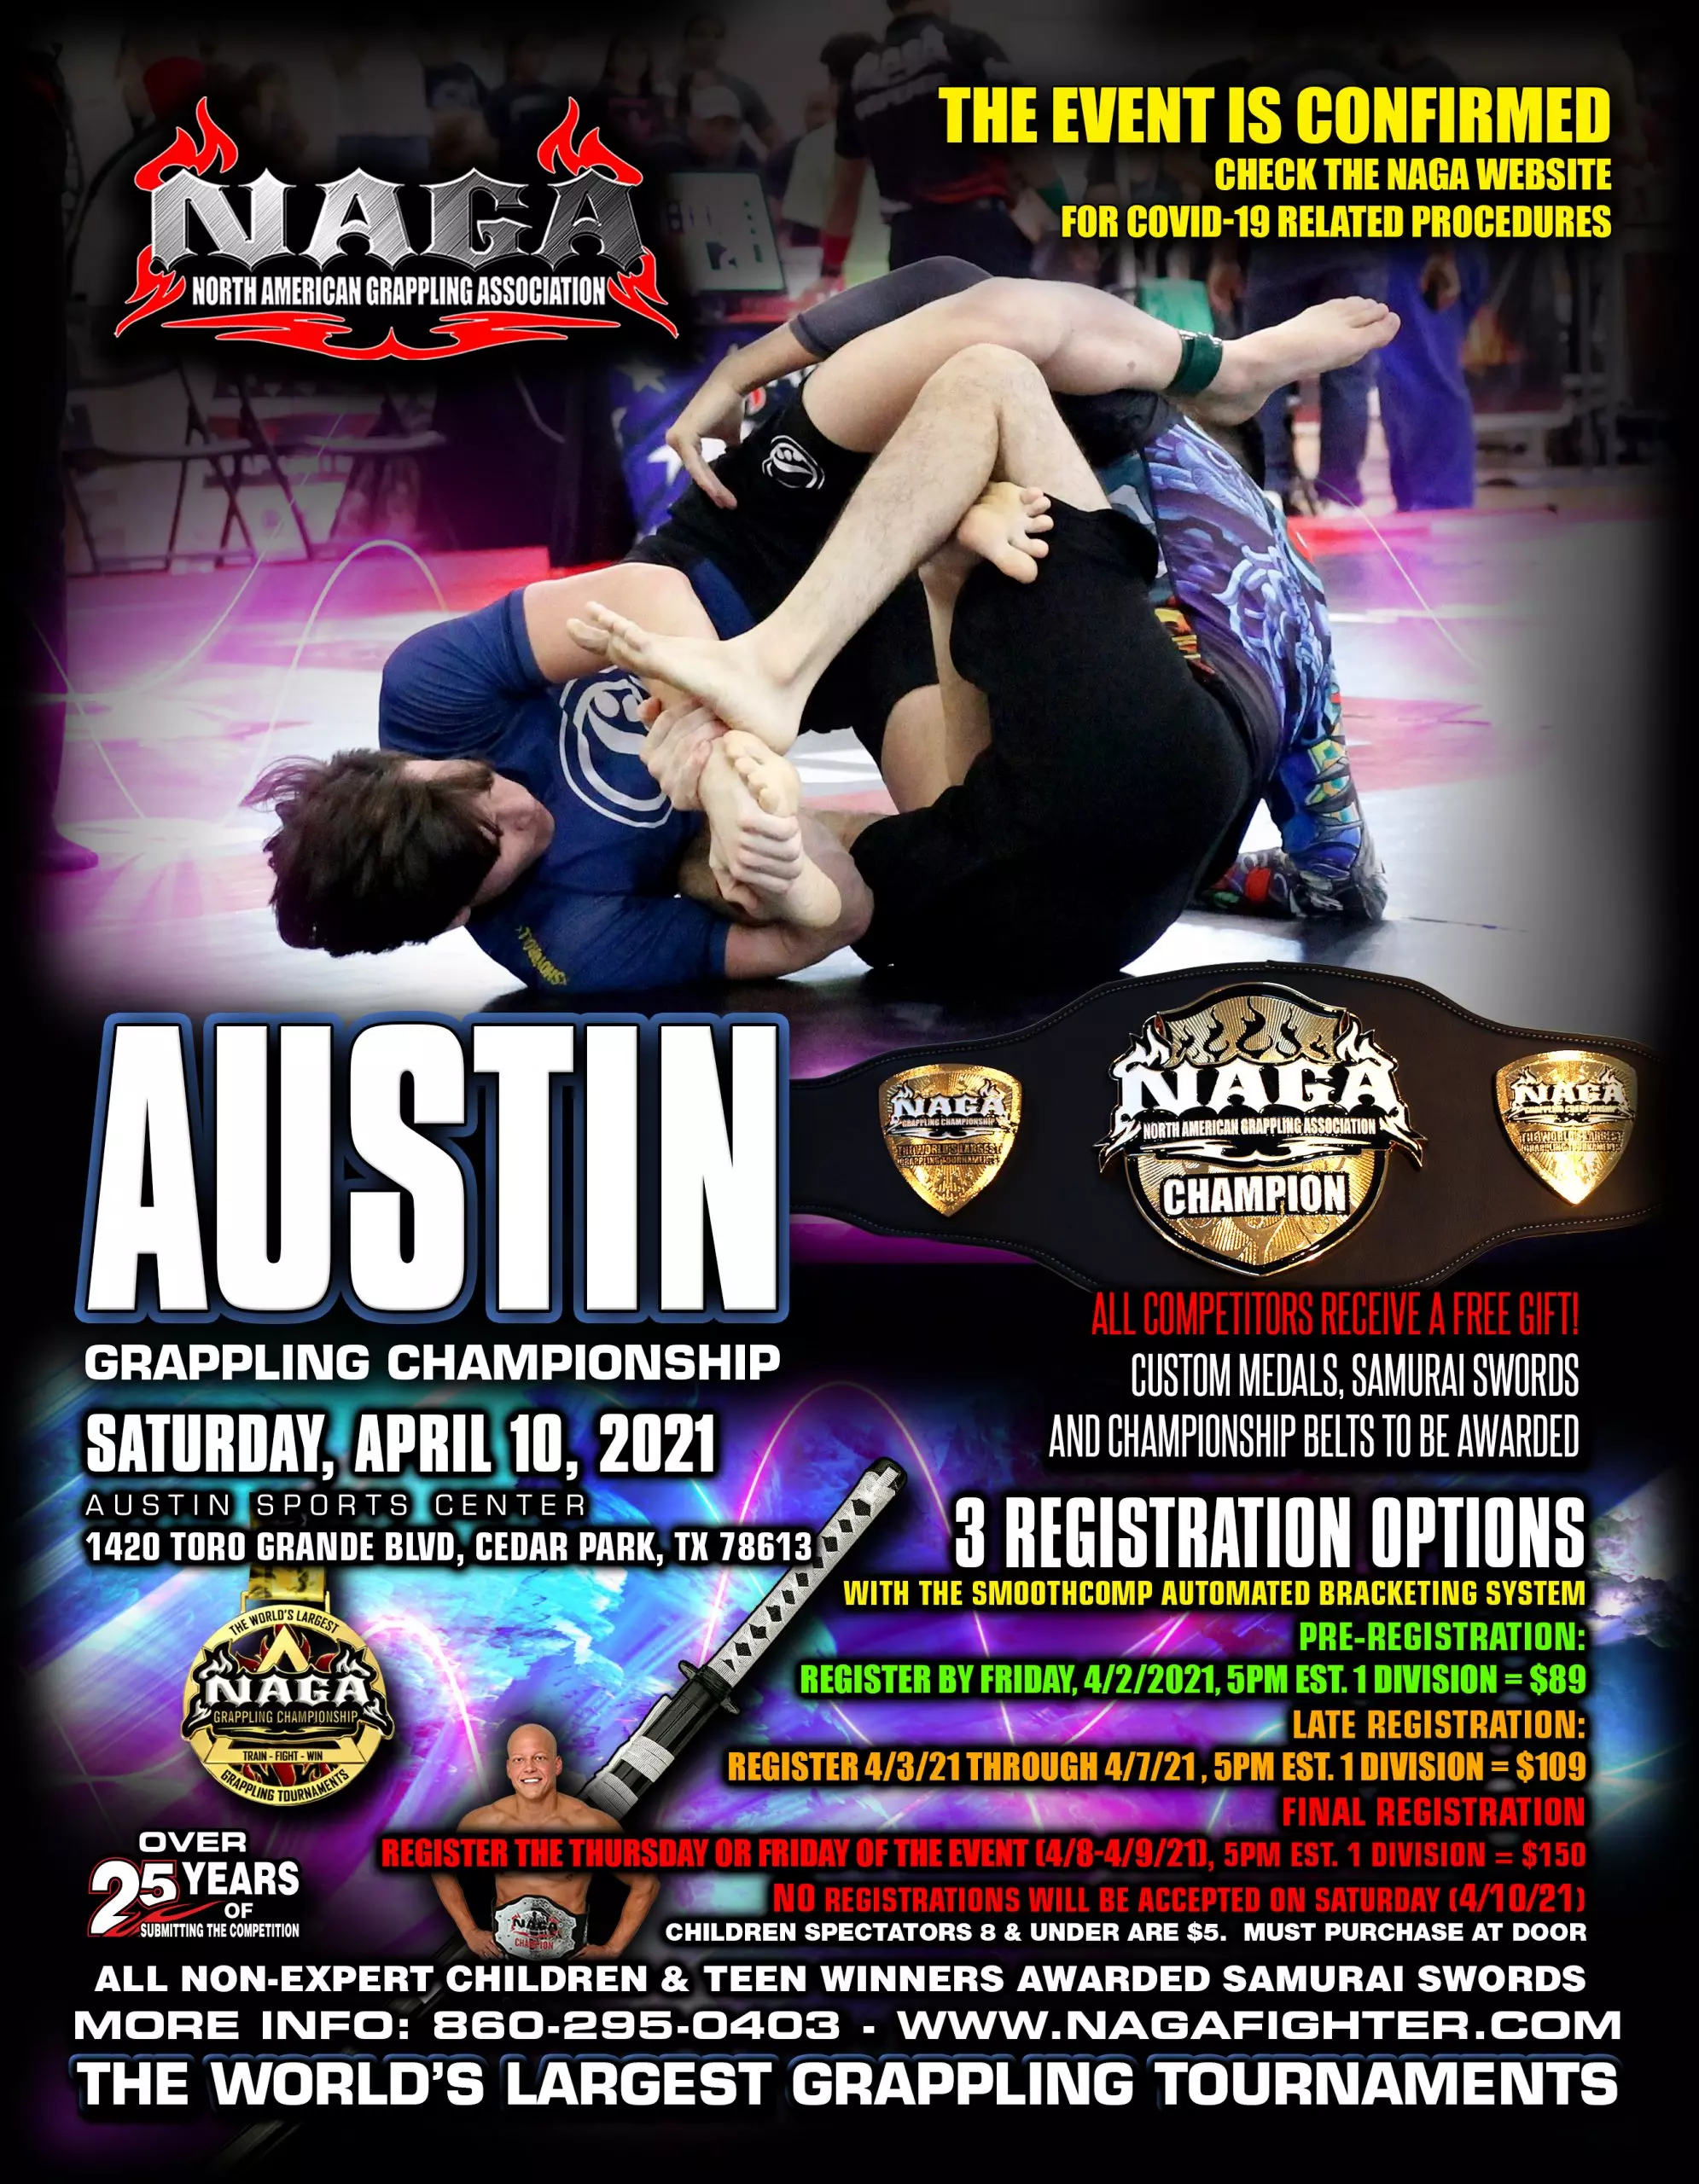 Austin Grappling Championship NAGA Fighter